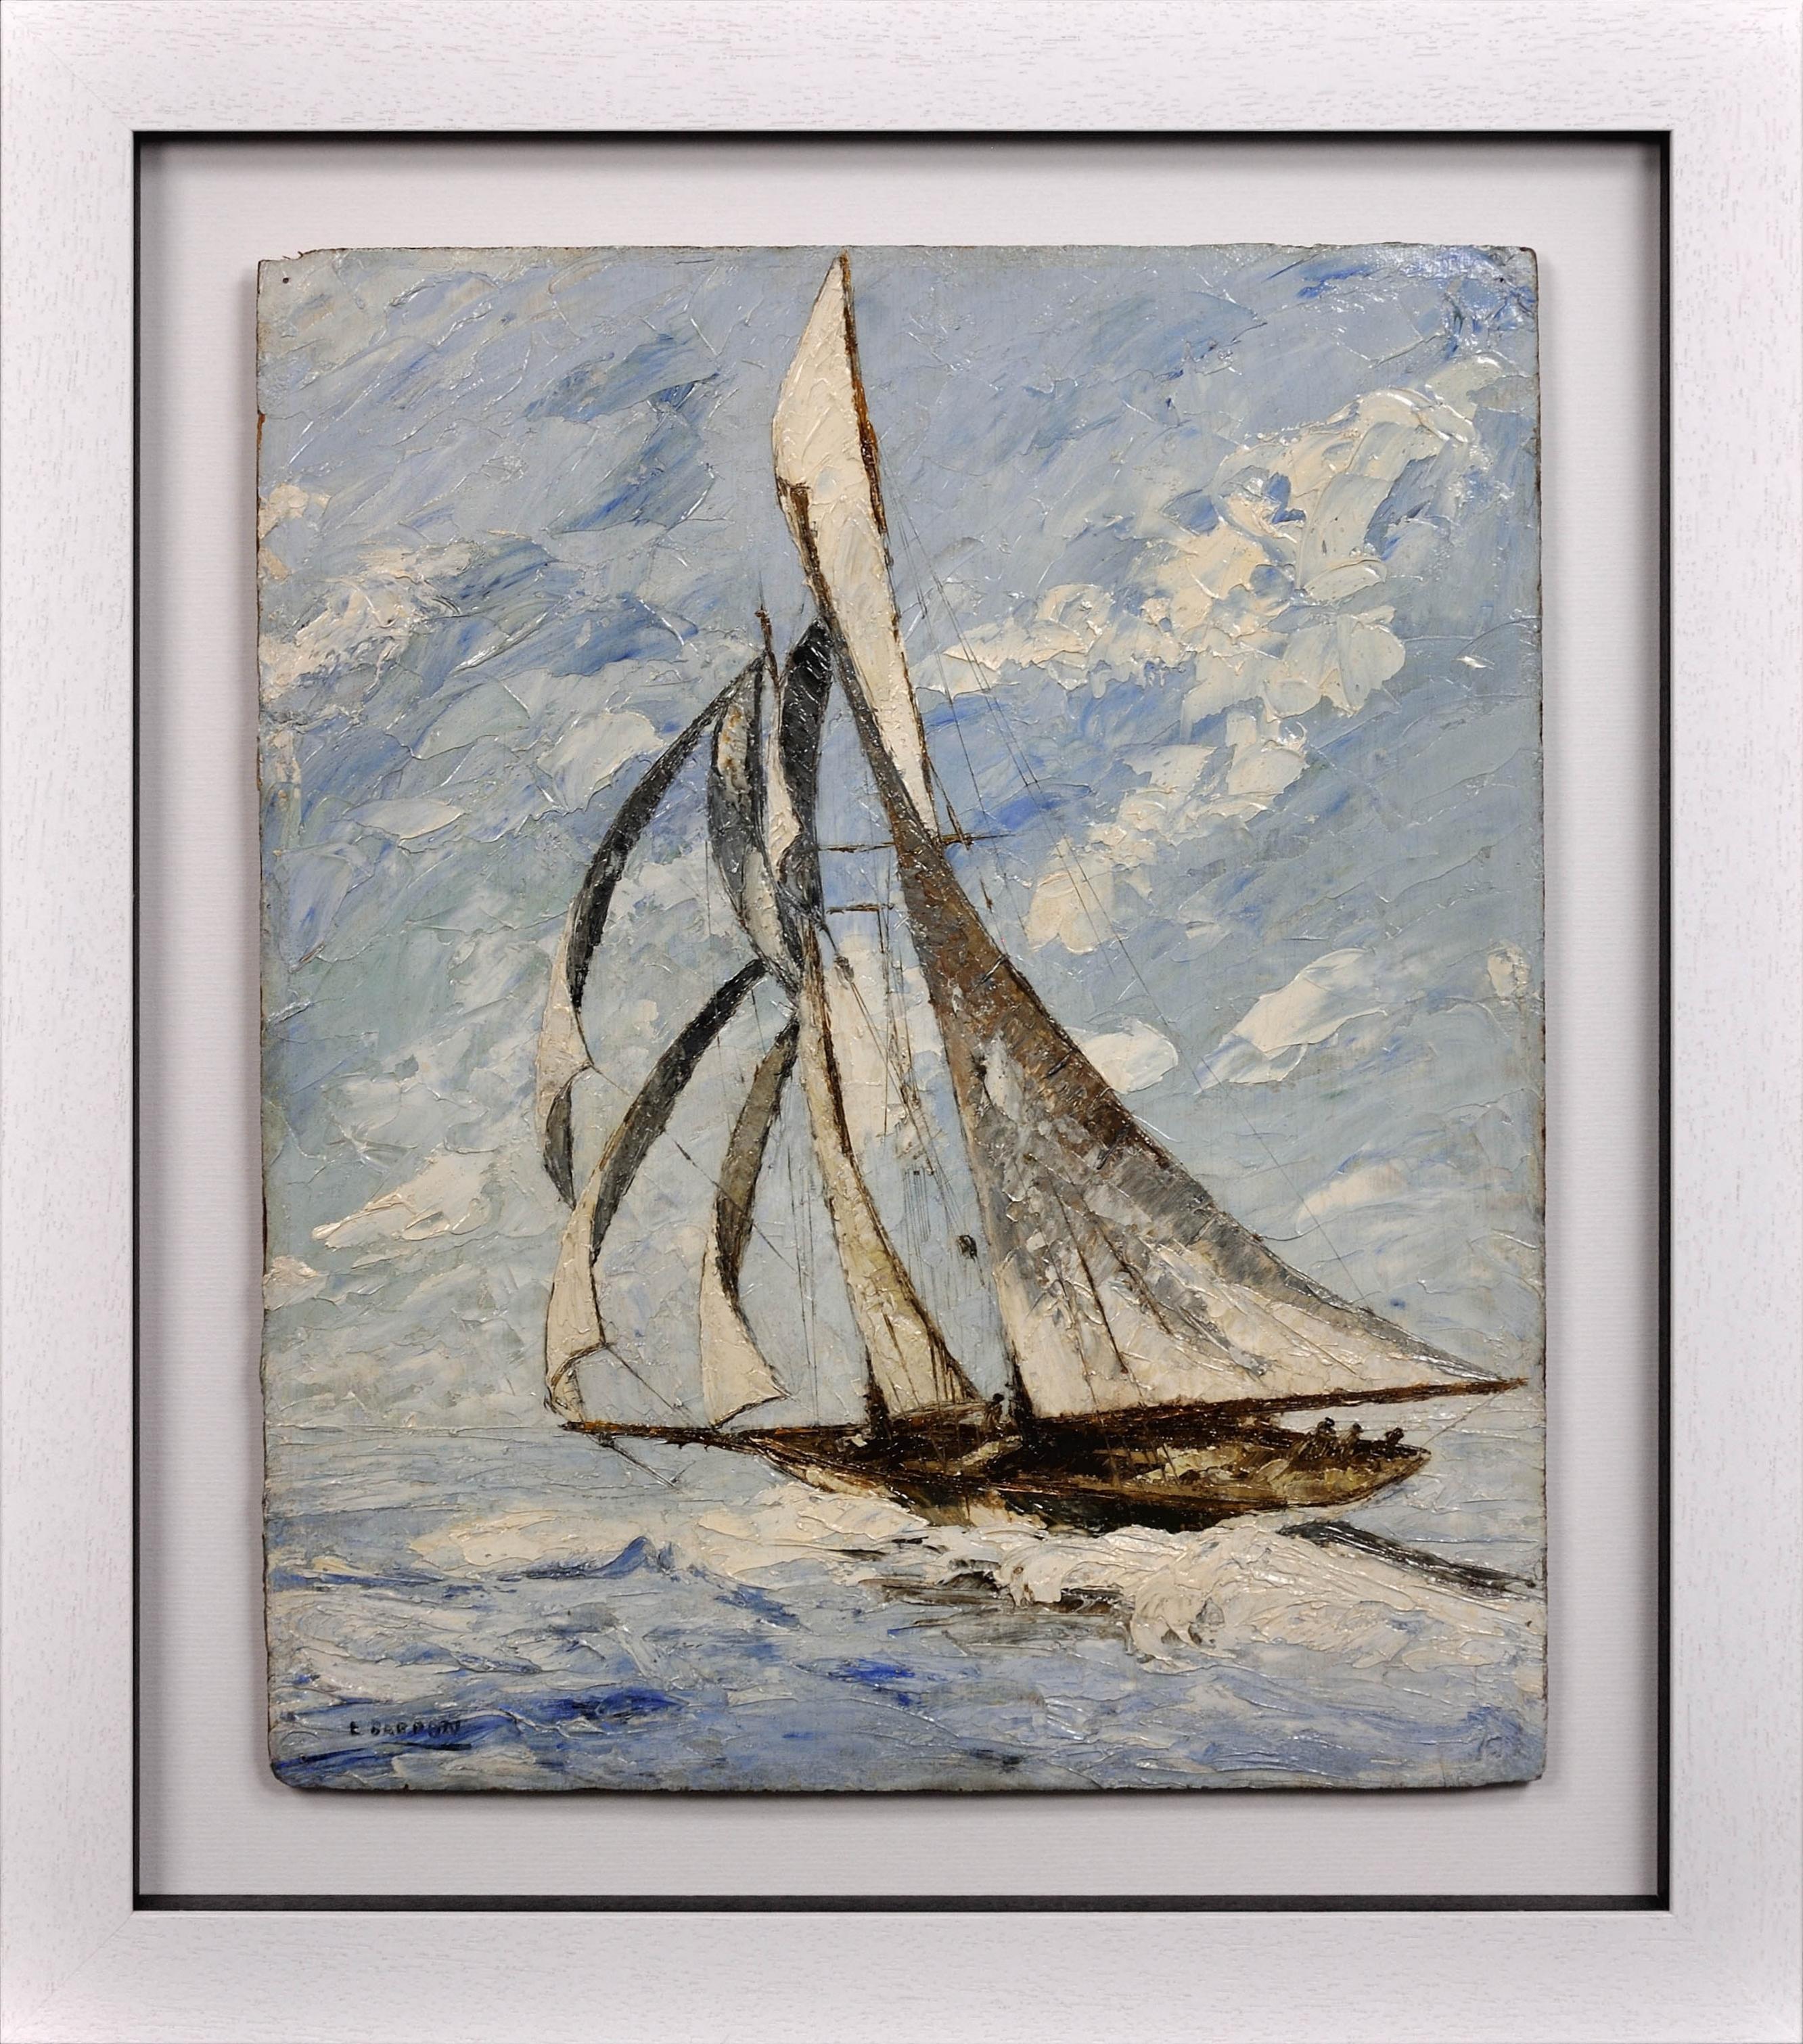 Elisabeth Bardon Landscape Painting - Ocean Gypsy. Sheets Down, Turning to Windward. 1930s Yachting Sailing Decadence.